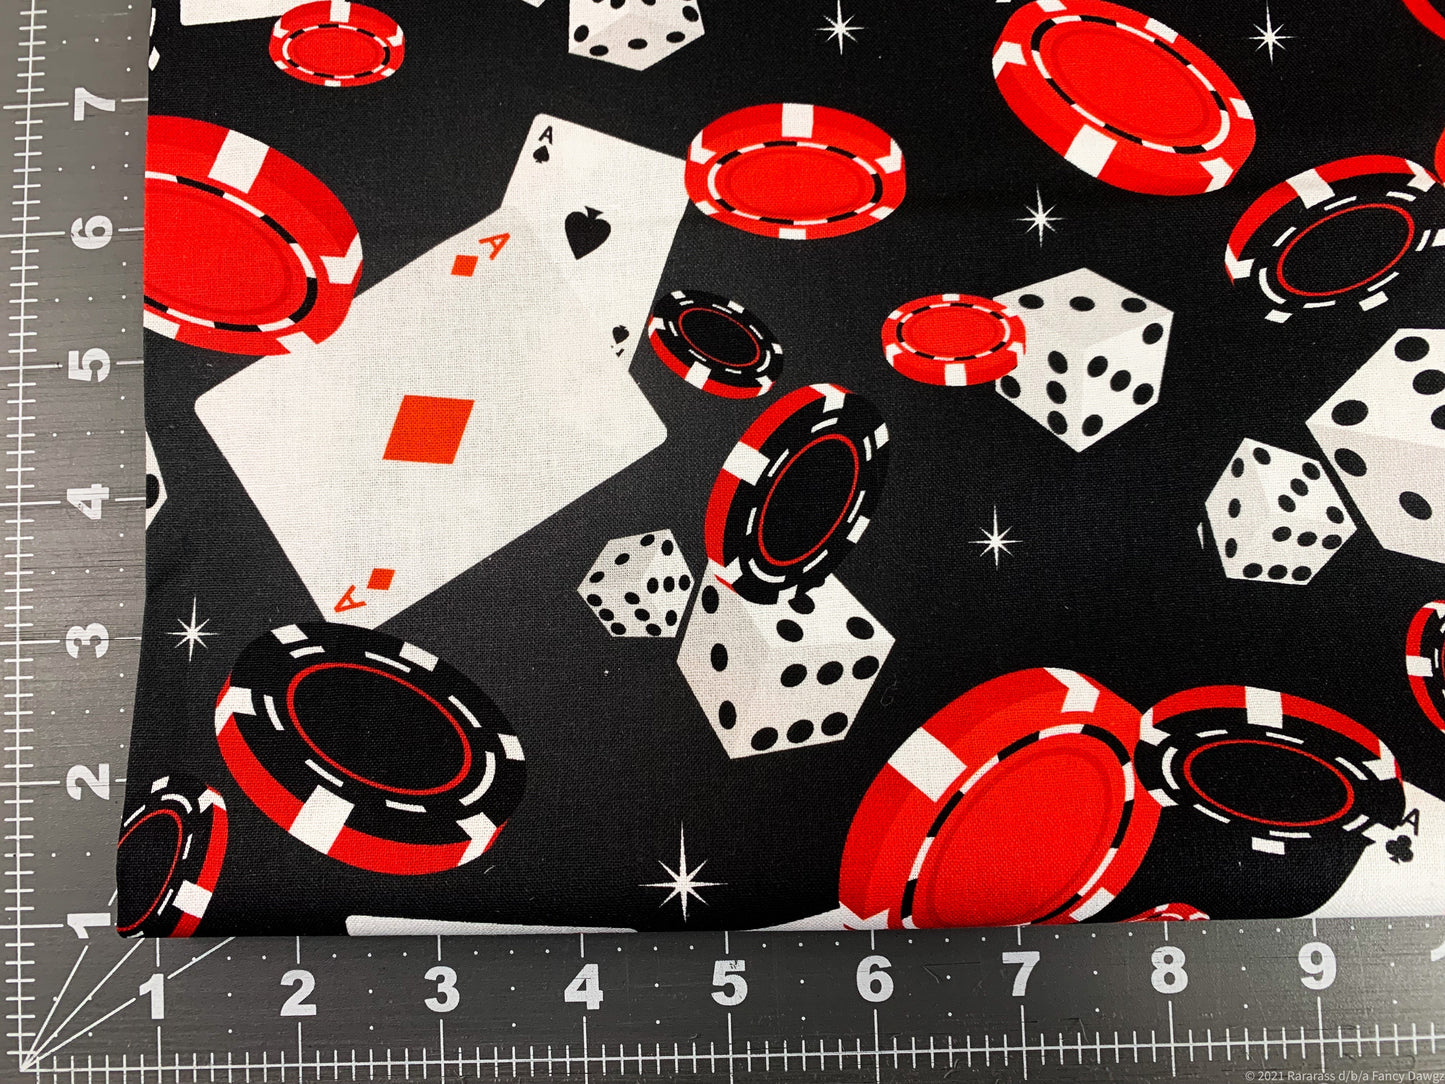 Red and Black Casino fabric DX25300C1 Gambling fabric